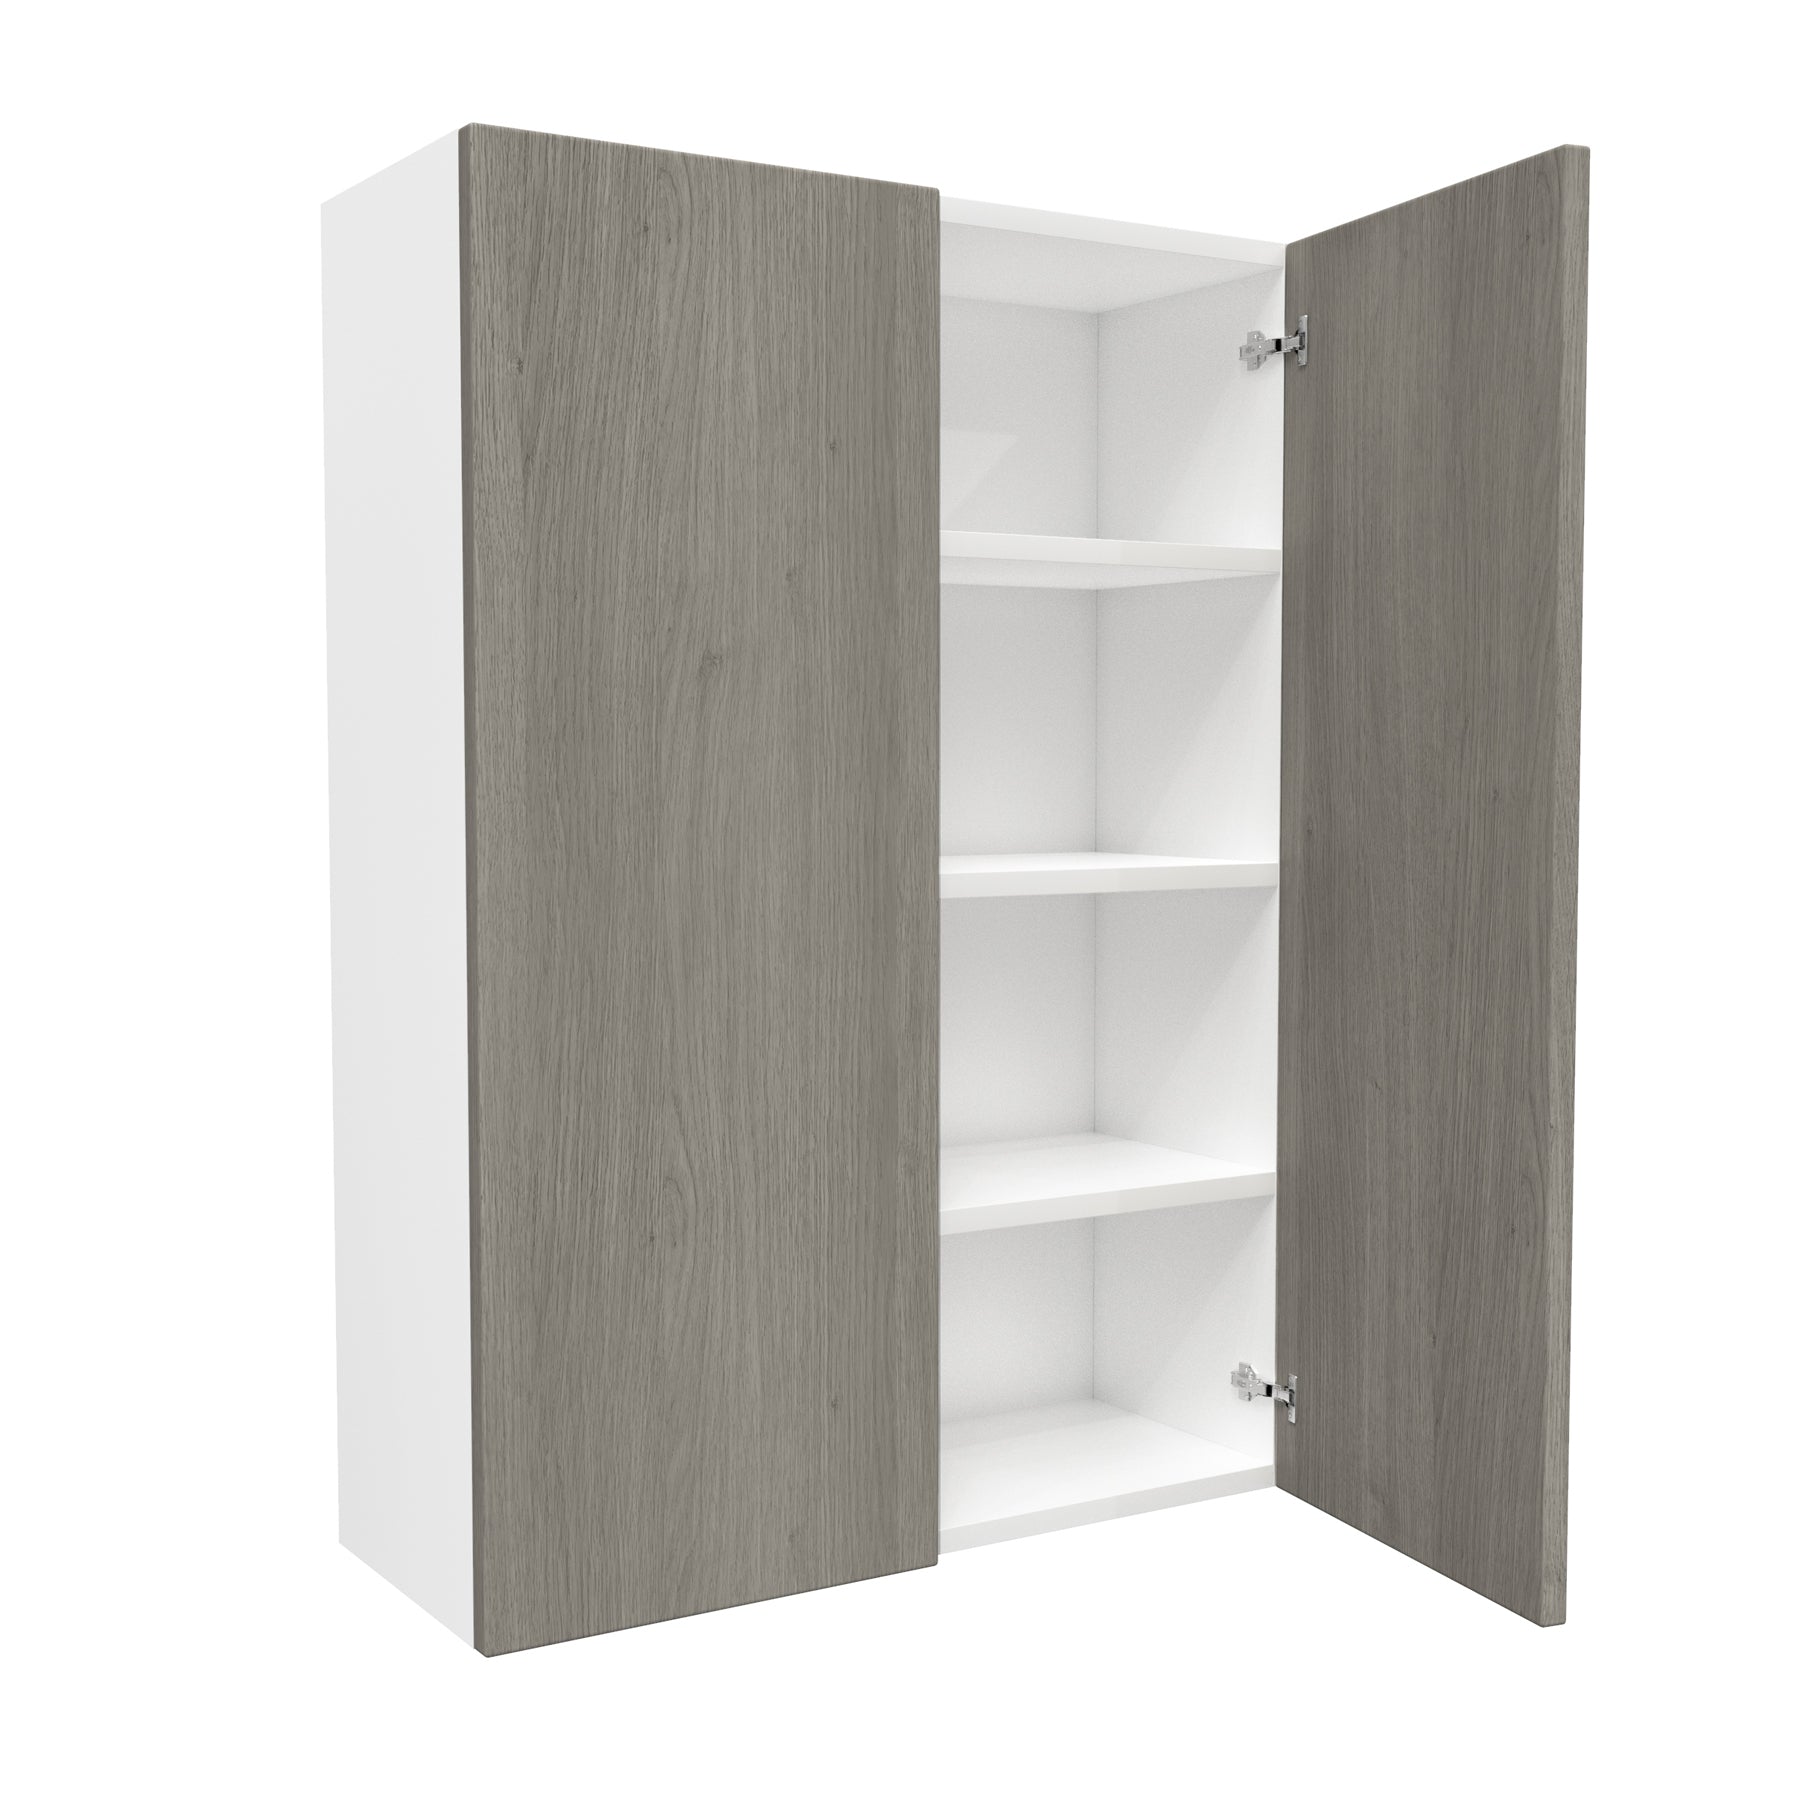 2 Door Wall Cabinet| Matrix Silver | 30W x 42H x 12D